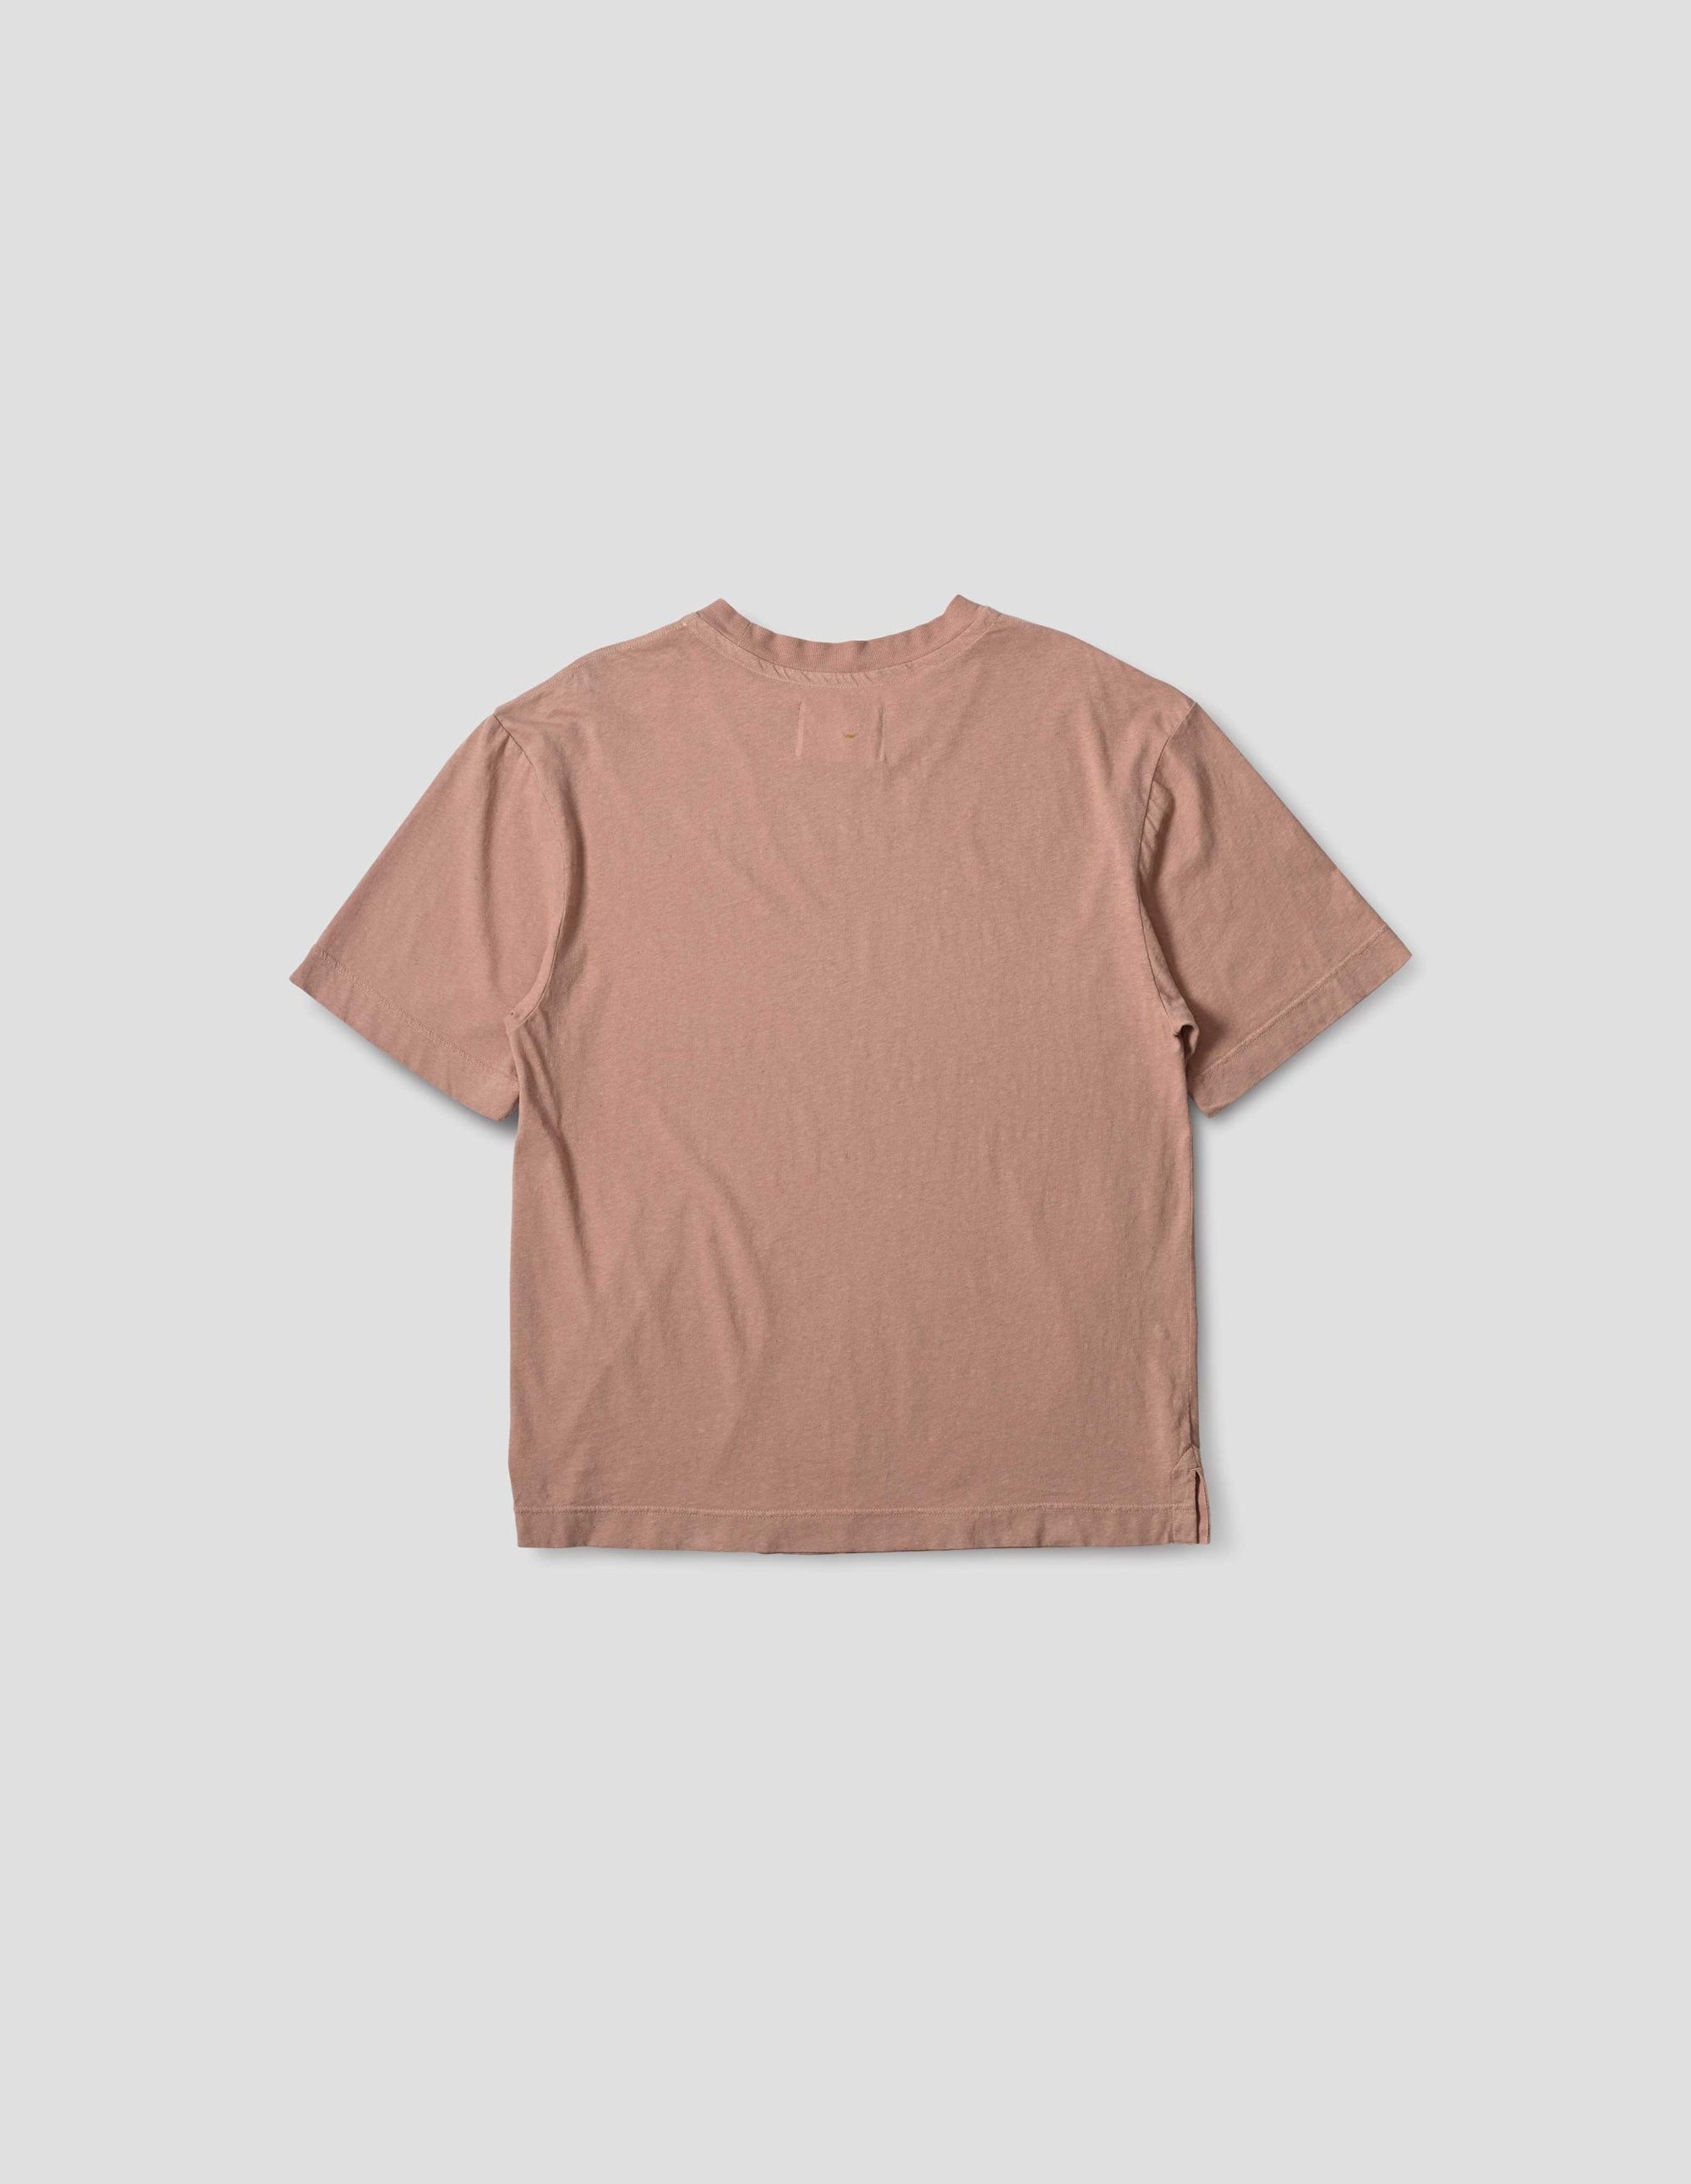 Simple T-Shirt Organic Cotton Linen Jersey - Pale Pink